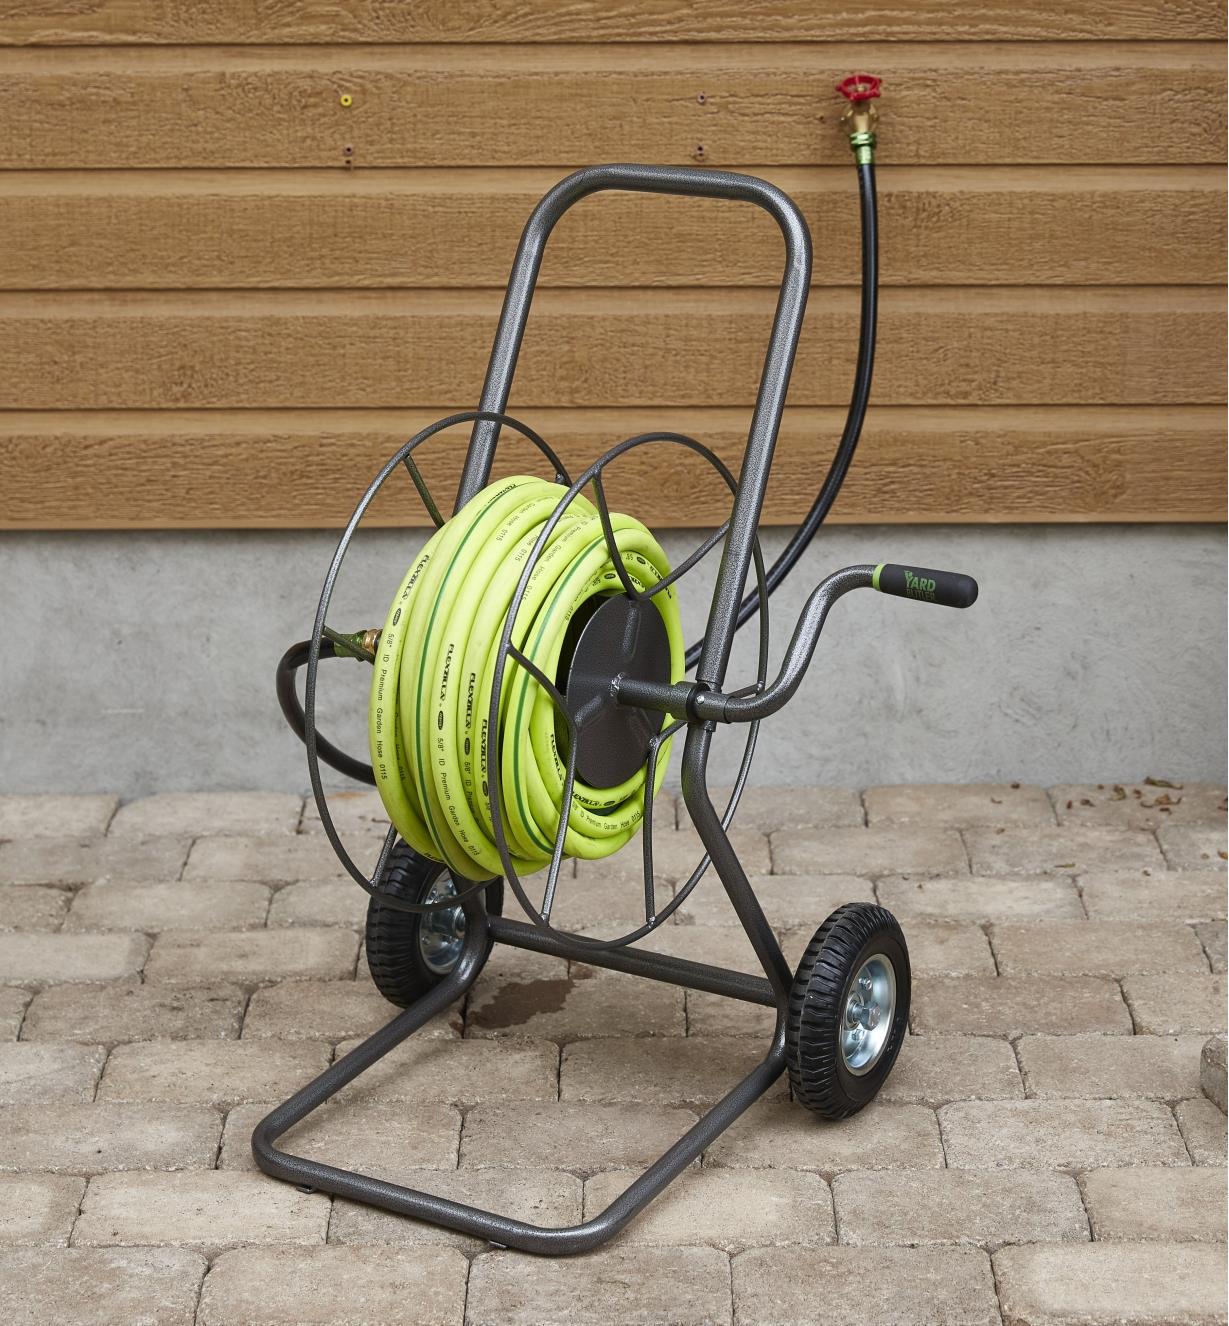 Hose reel cart holding garden hose on a patio